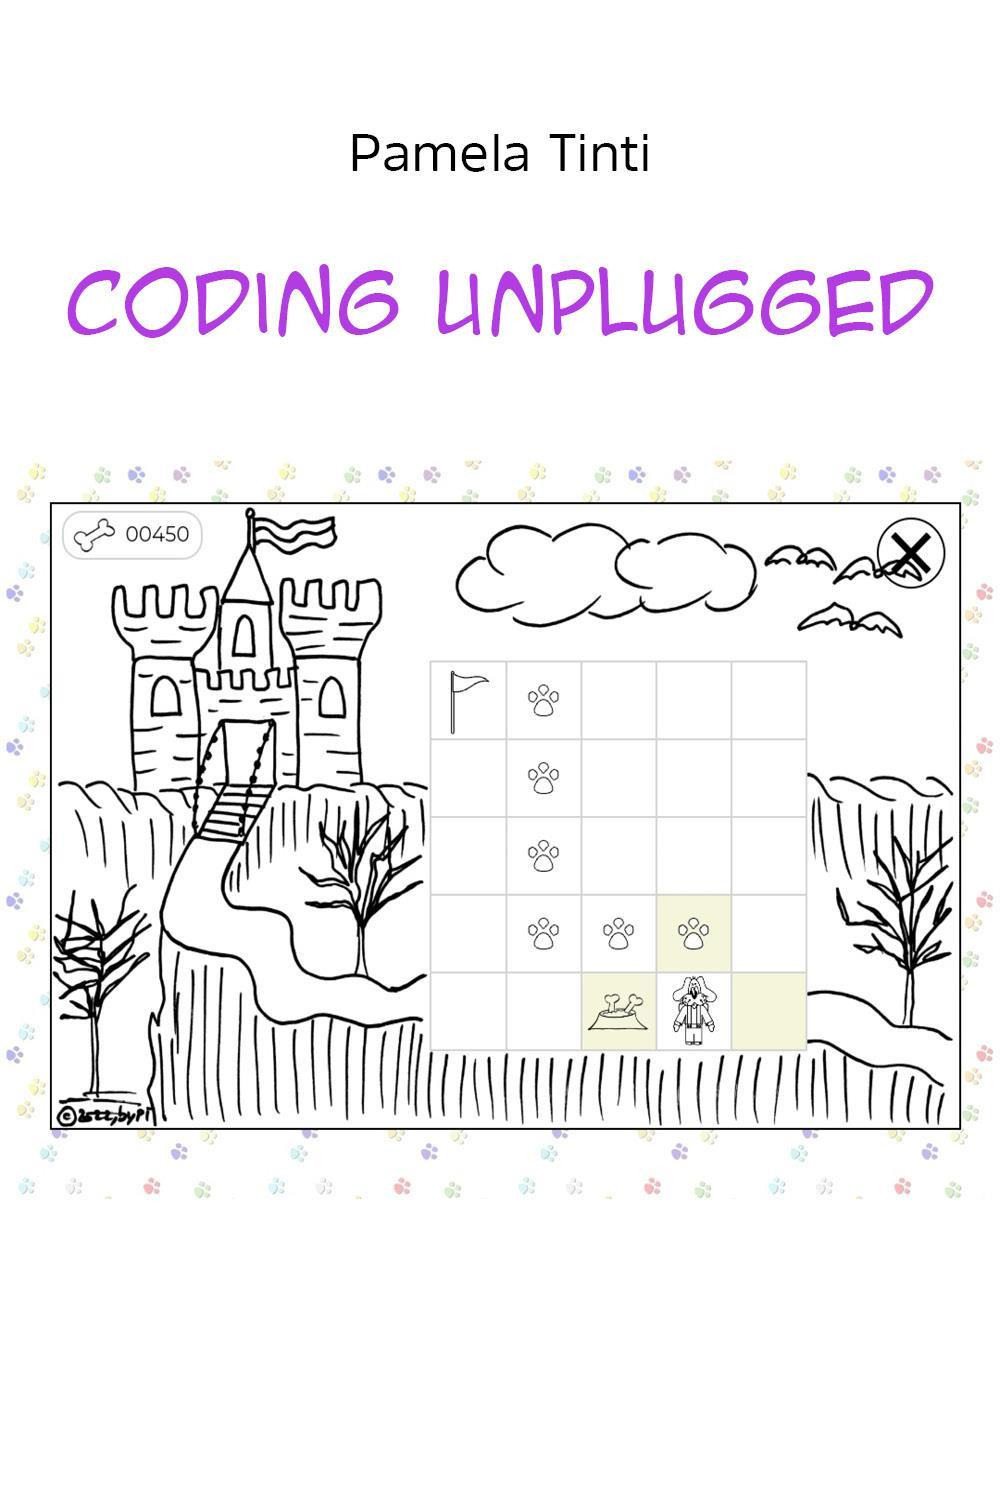 Coding unplugged